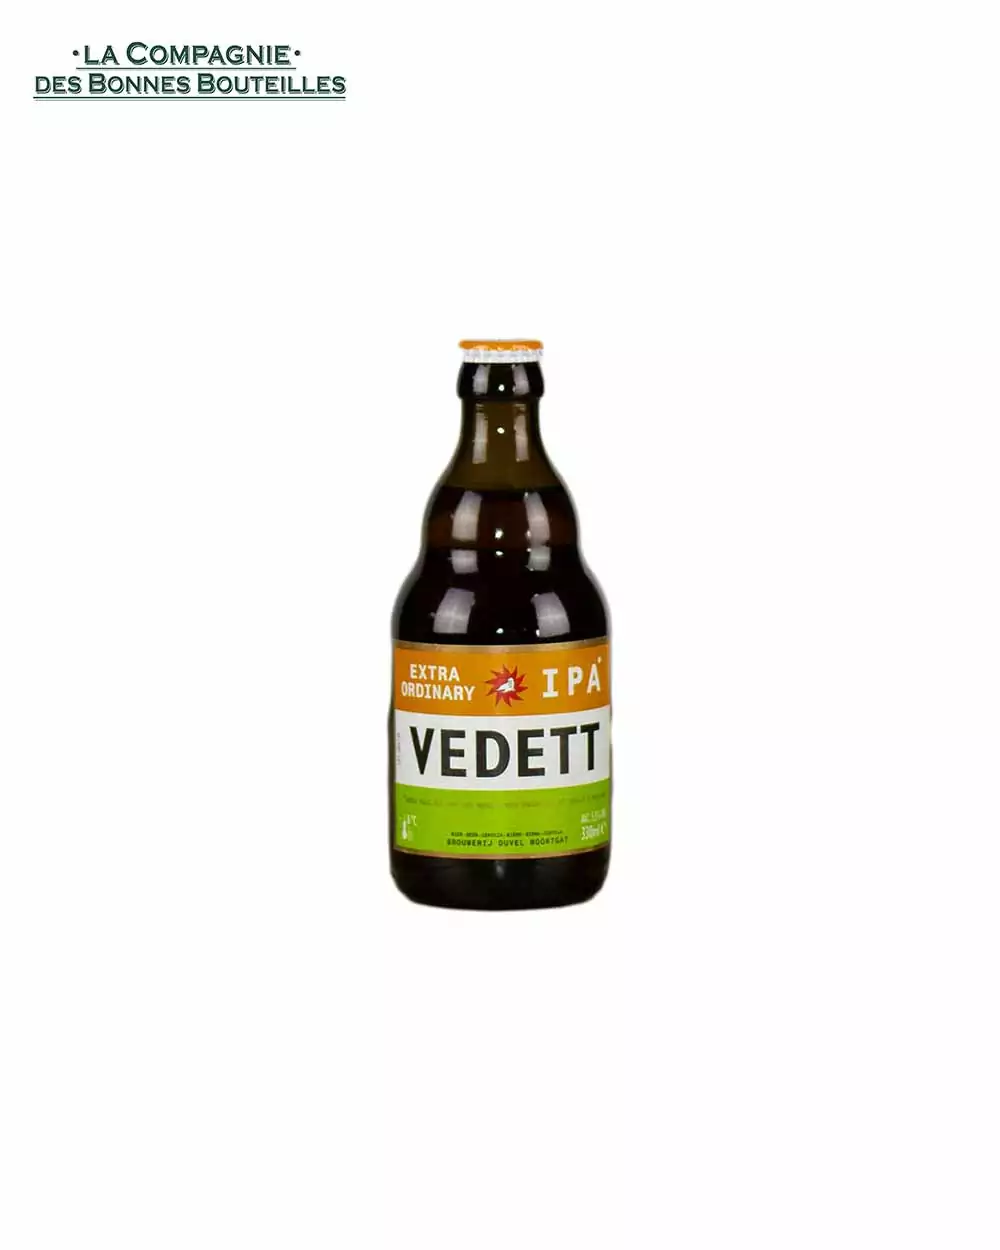 Bière Vedett IPA VC 33cl